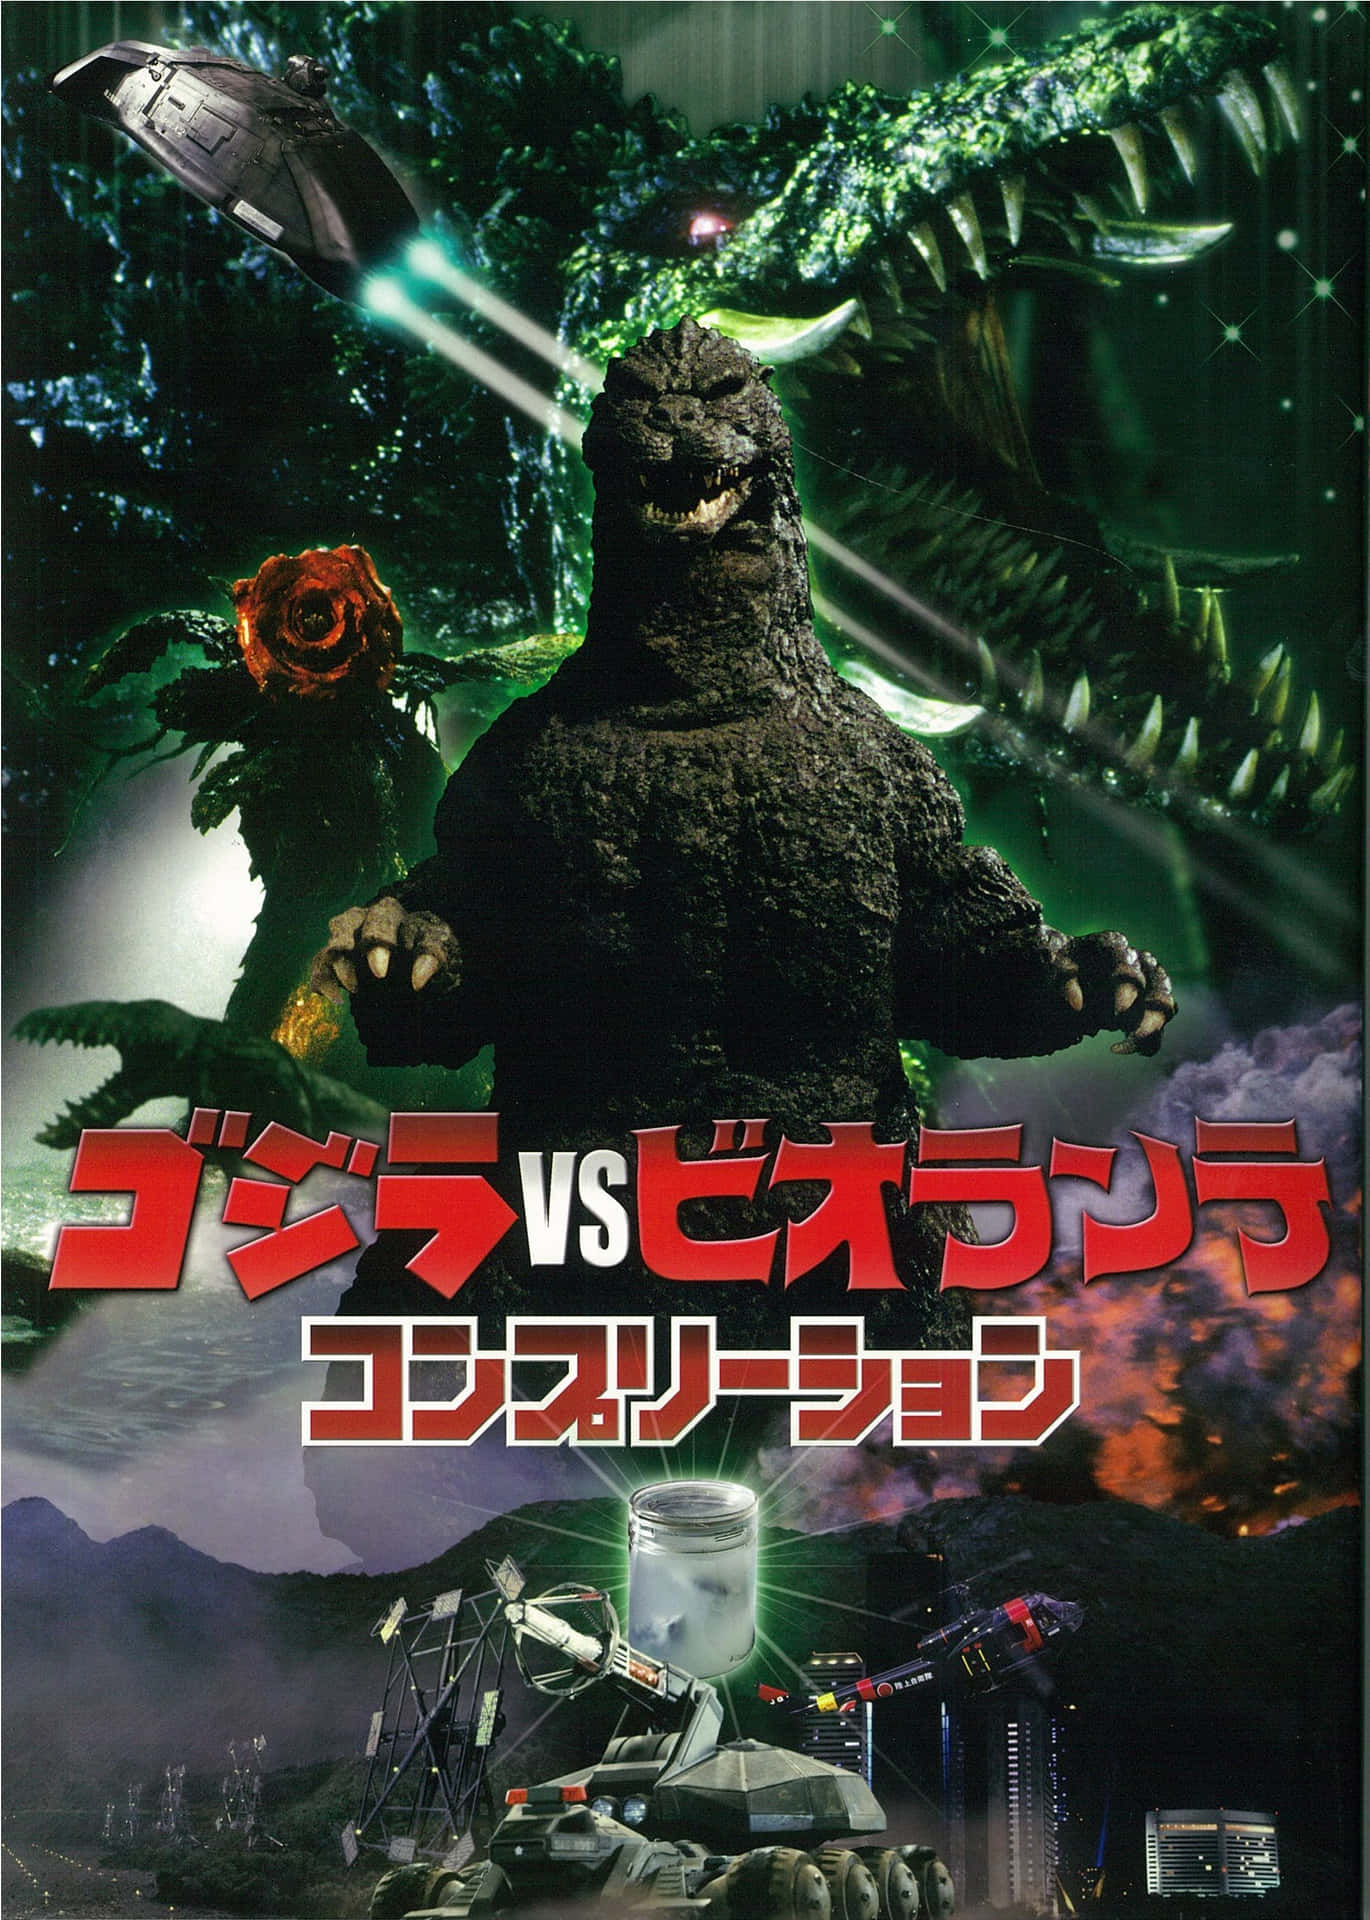 A monstrous clash between Godzilla and Biollante Wallpaper